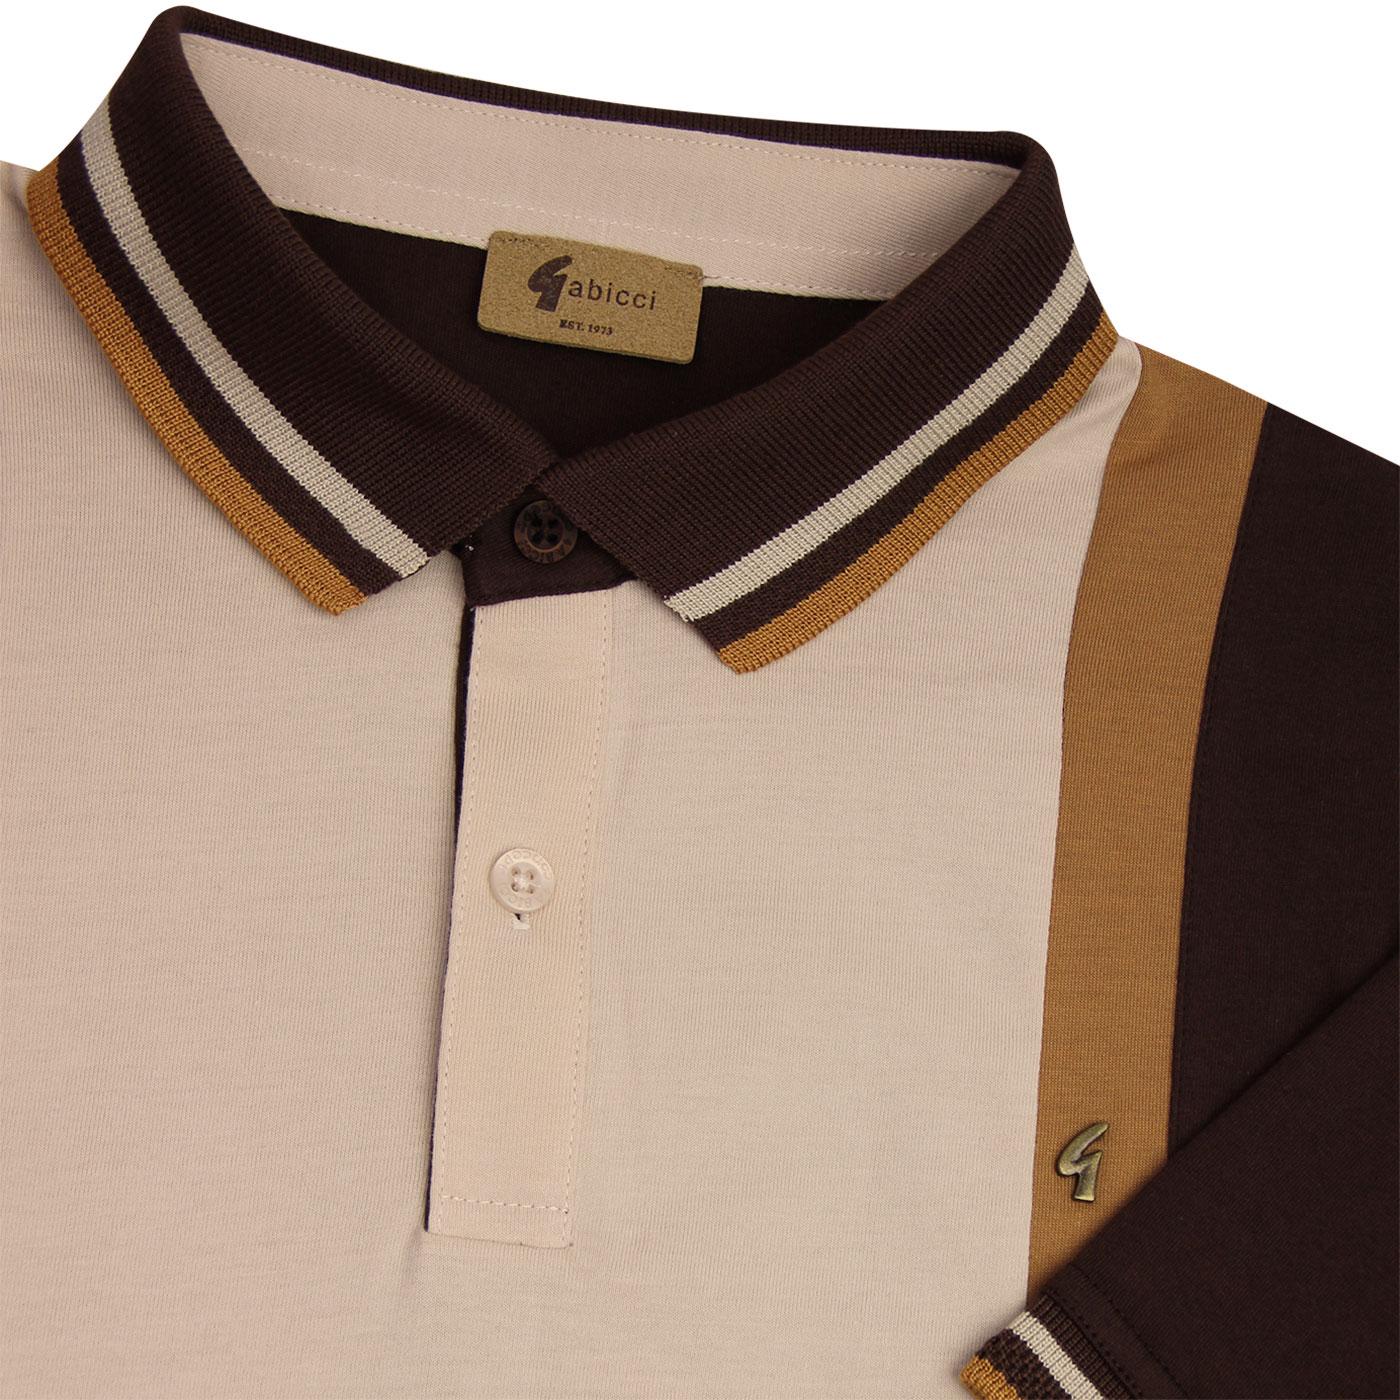 Brace GABICCI VINTAGE Retro 70s Mod Polo Shirt in Brown